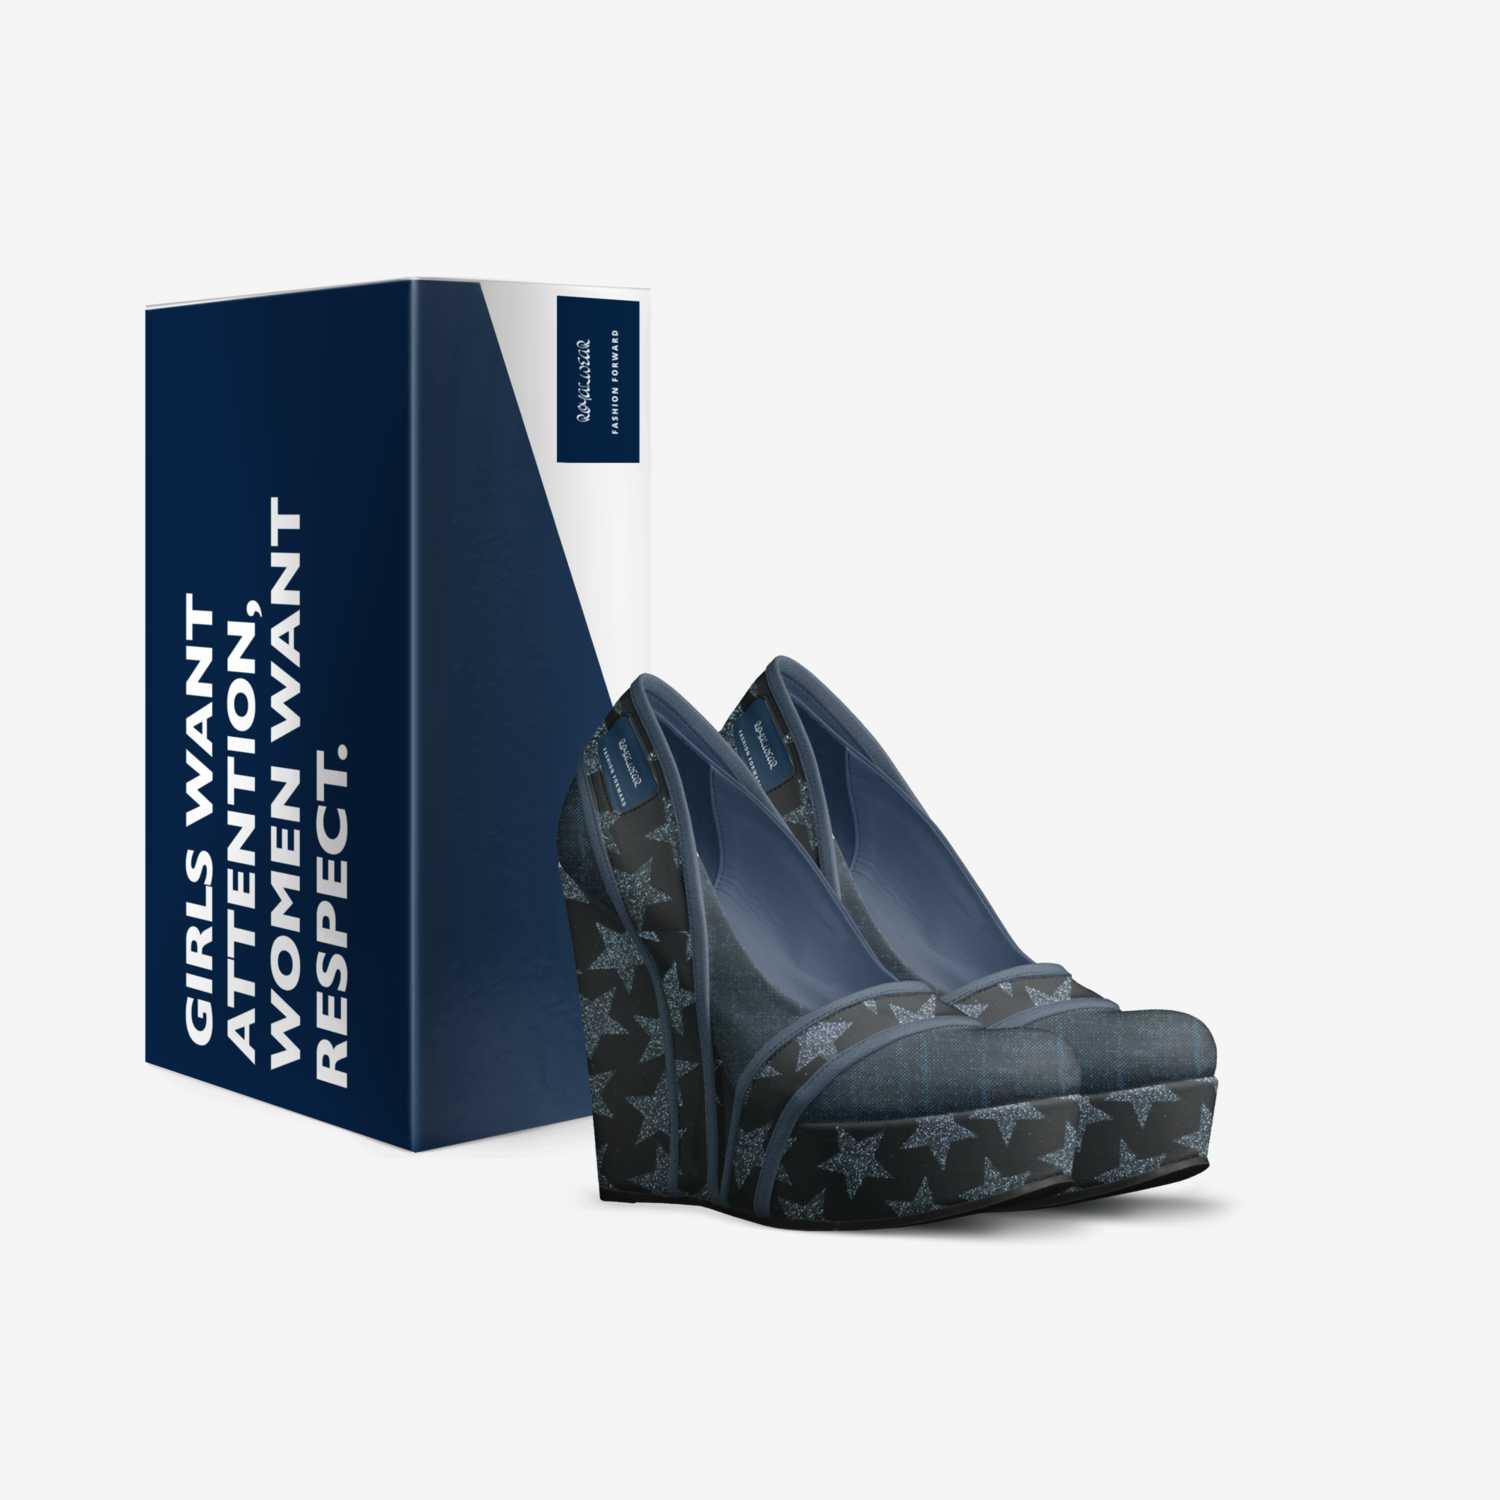 ROYALWEAR custom made in Italy shoes by Danshaun Hampton | Box view